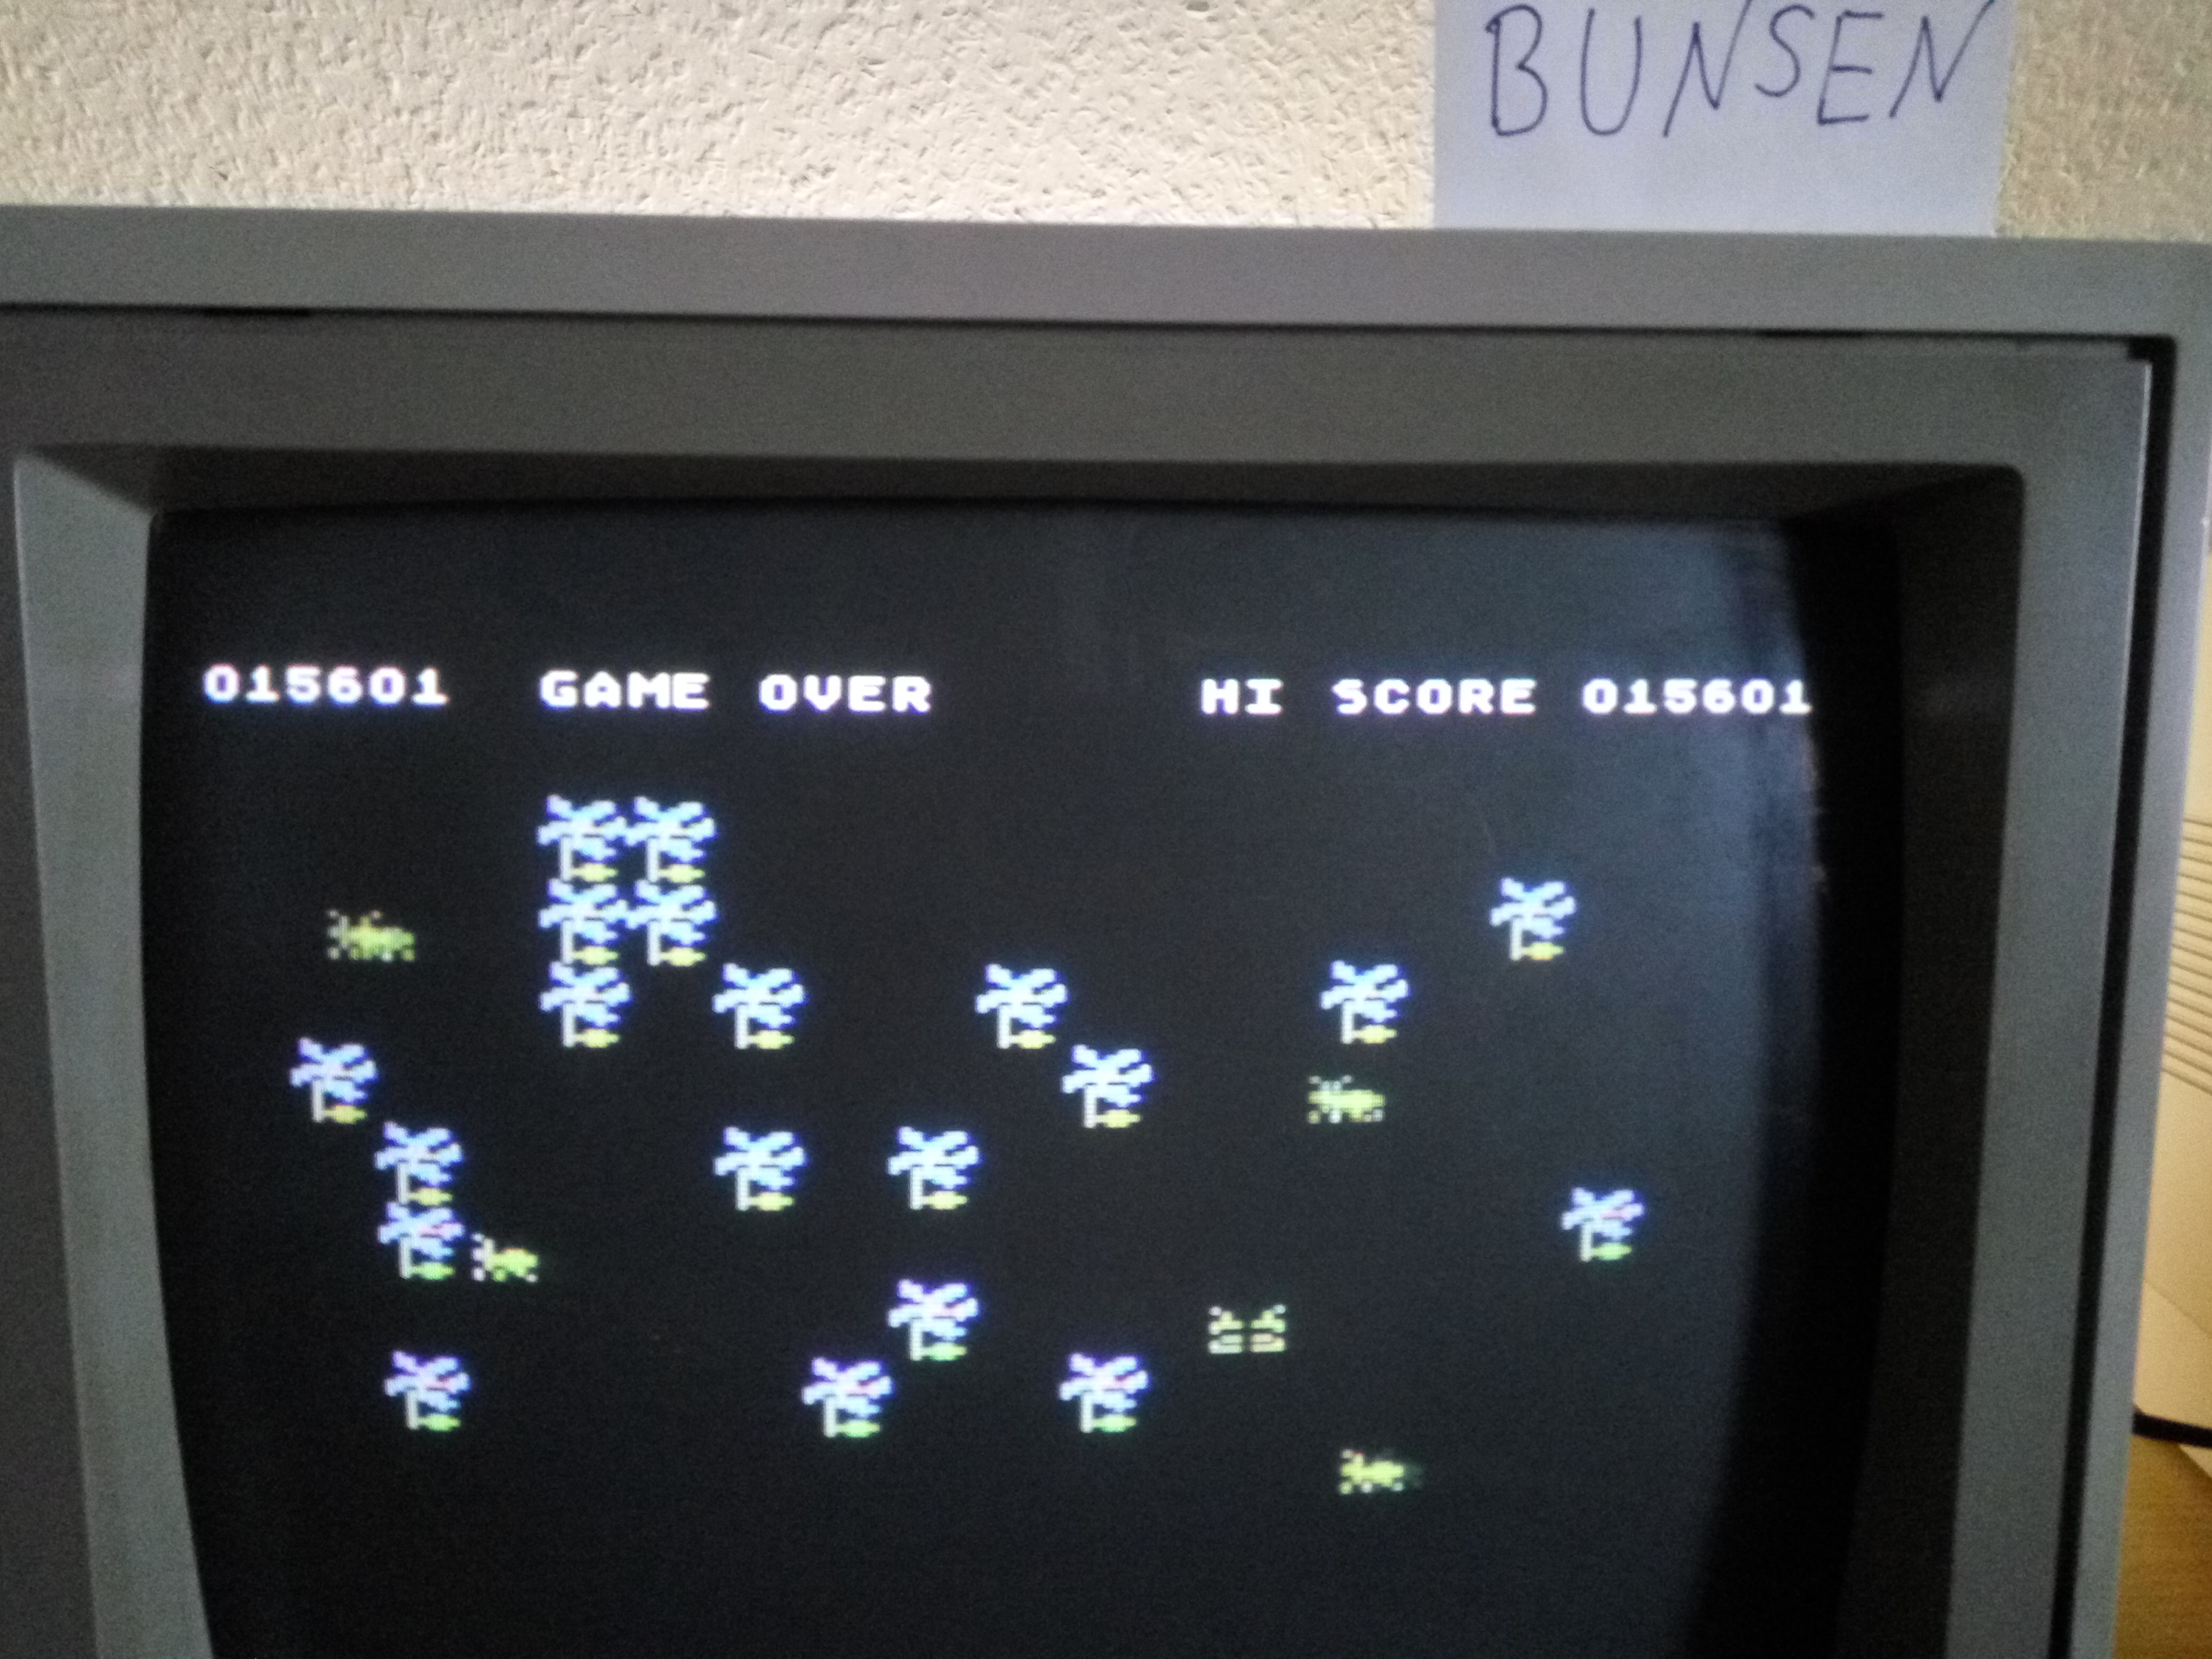 Bunsen: Bug Attack (Atari 400/800/XL/XE) 15,601 points on 2016-04-26 11:29:14